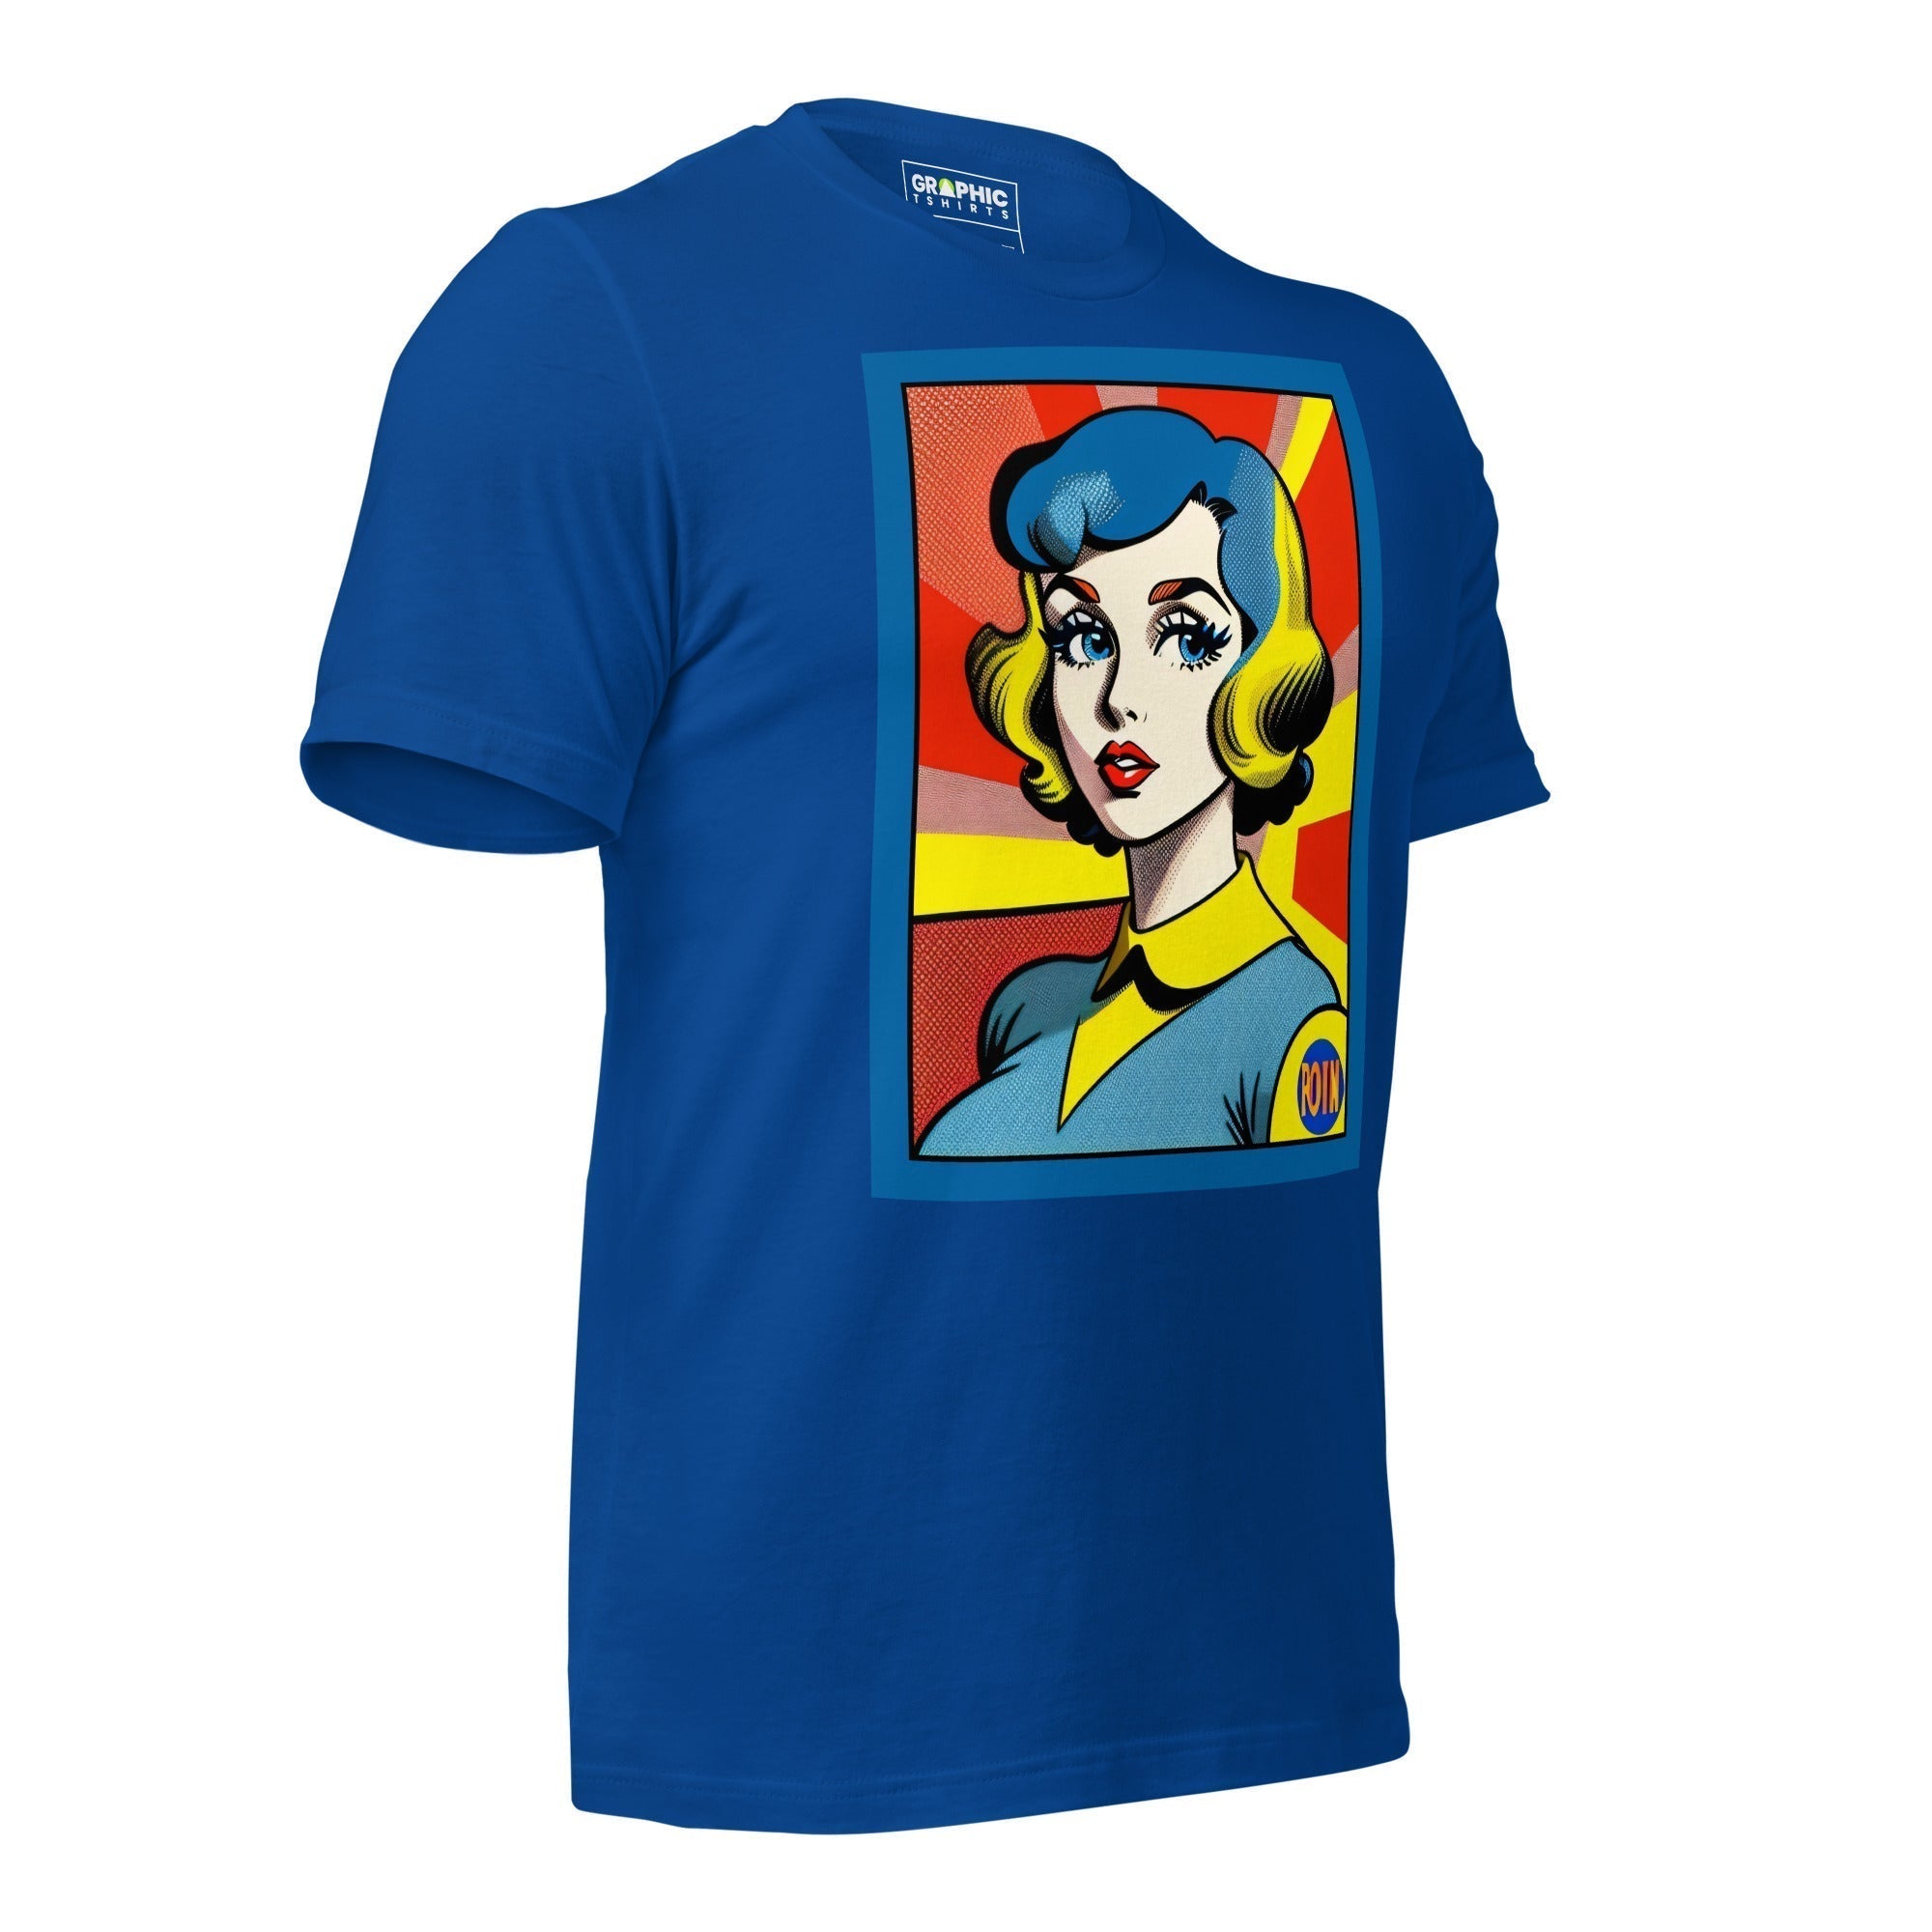 Unisex Crew Neck T-Shirt - Vintage American Comic Series v.13 - GRAPHIC T-SHIRTS